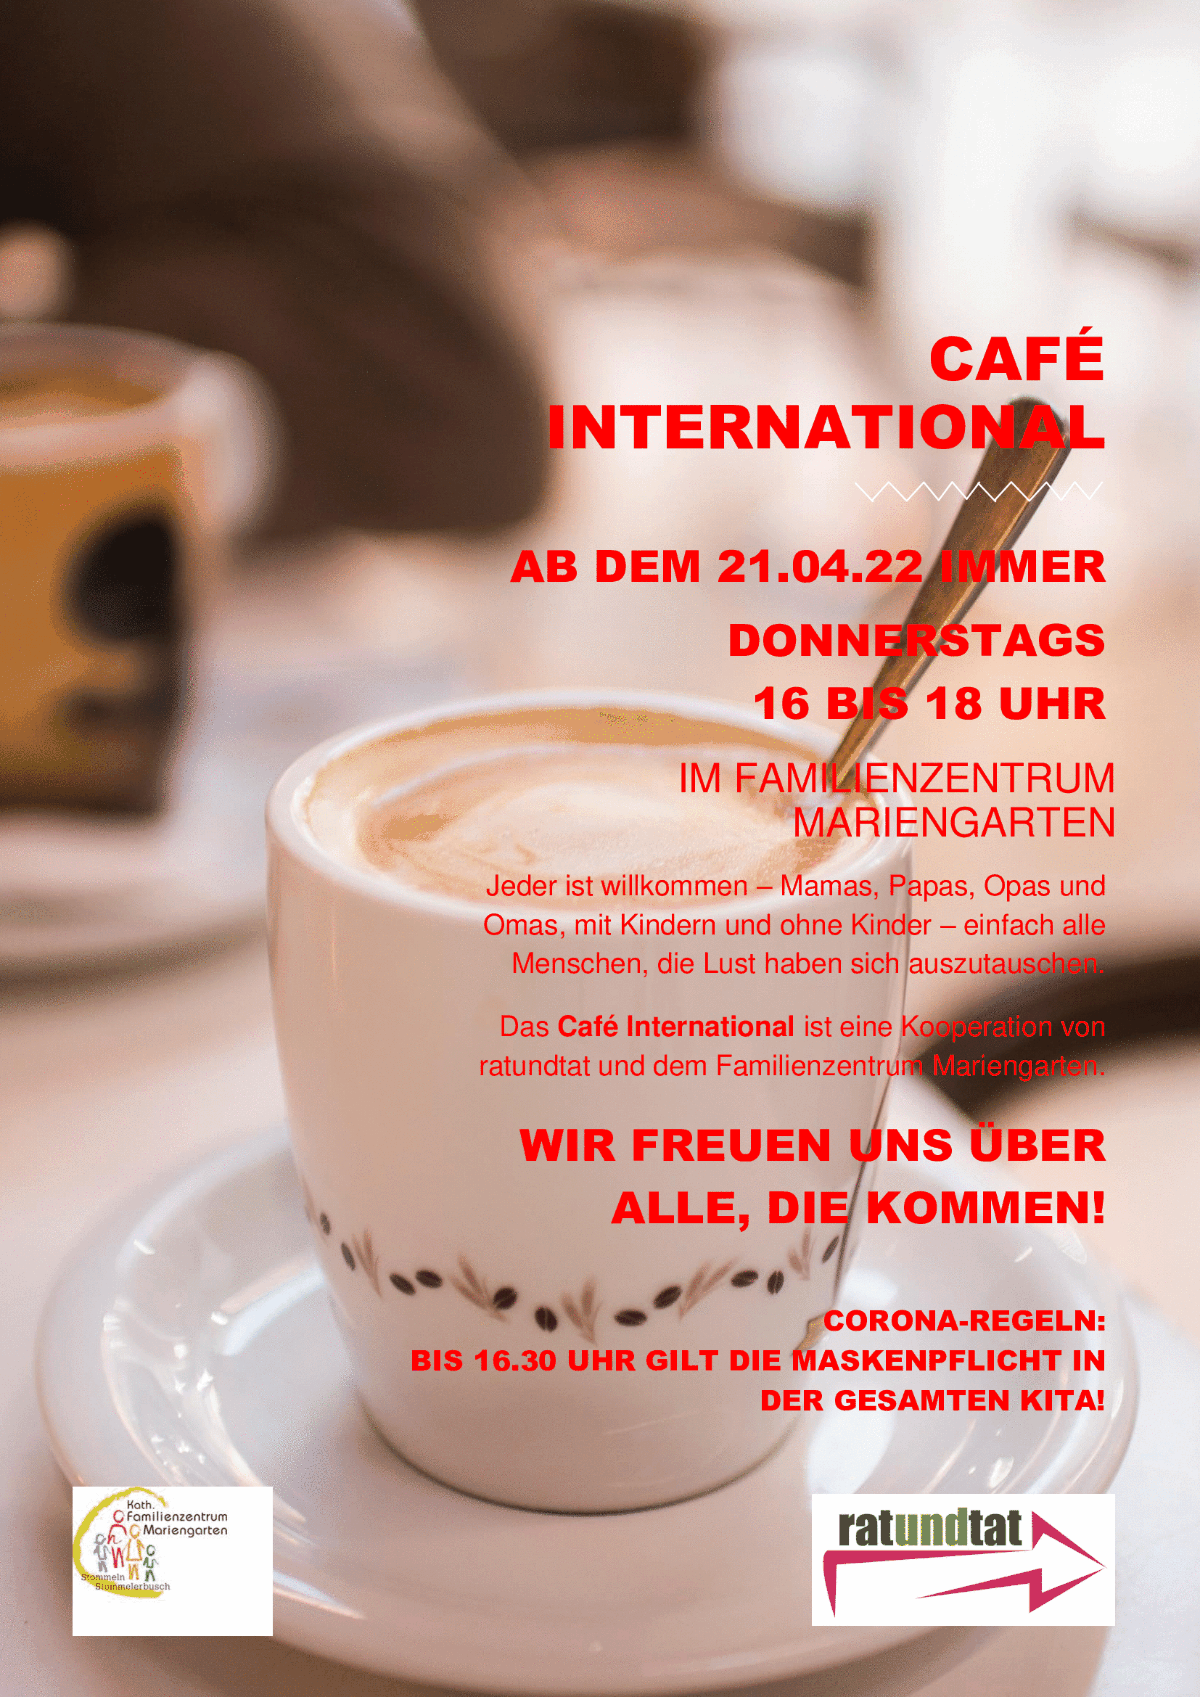 Cafe-International (c) bing.com